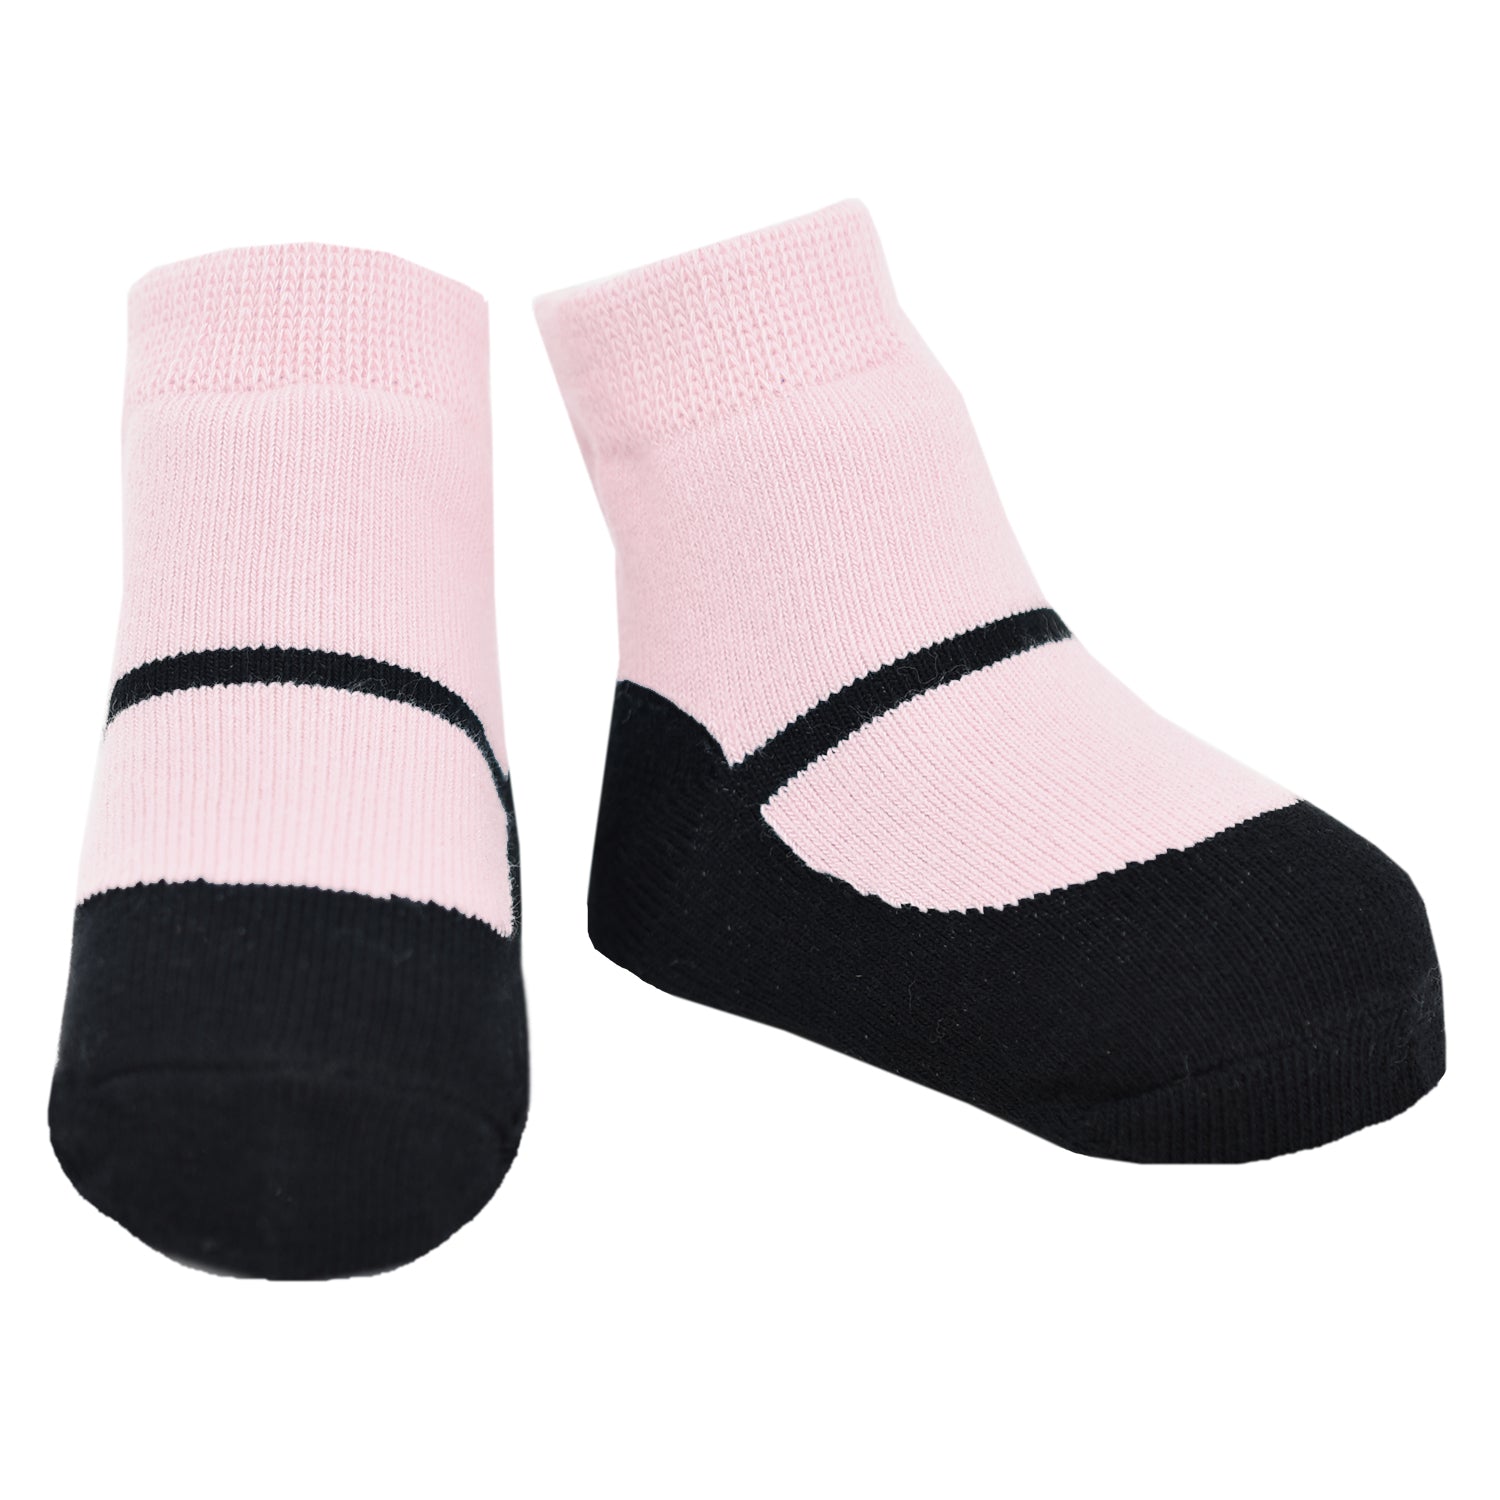 Black Mary Jane shoe look socks light pink top